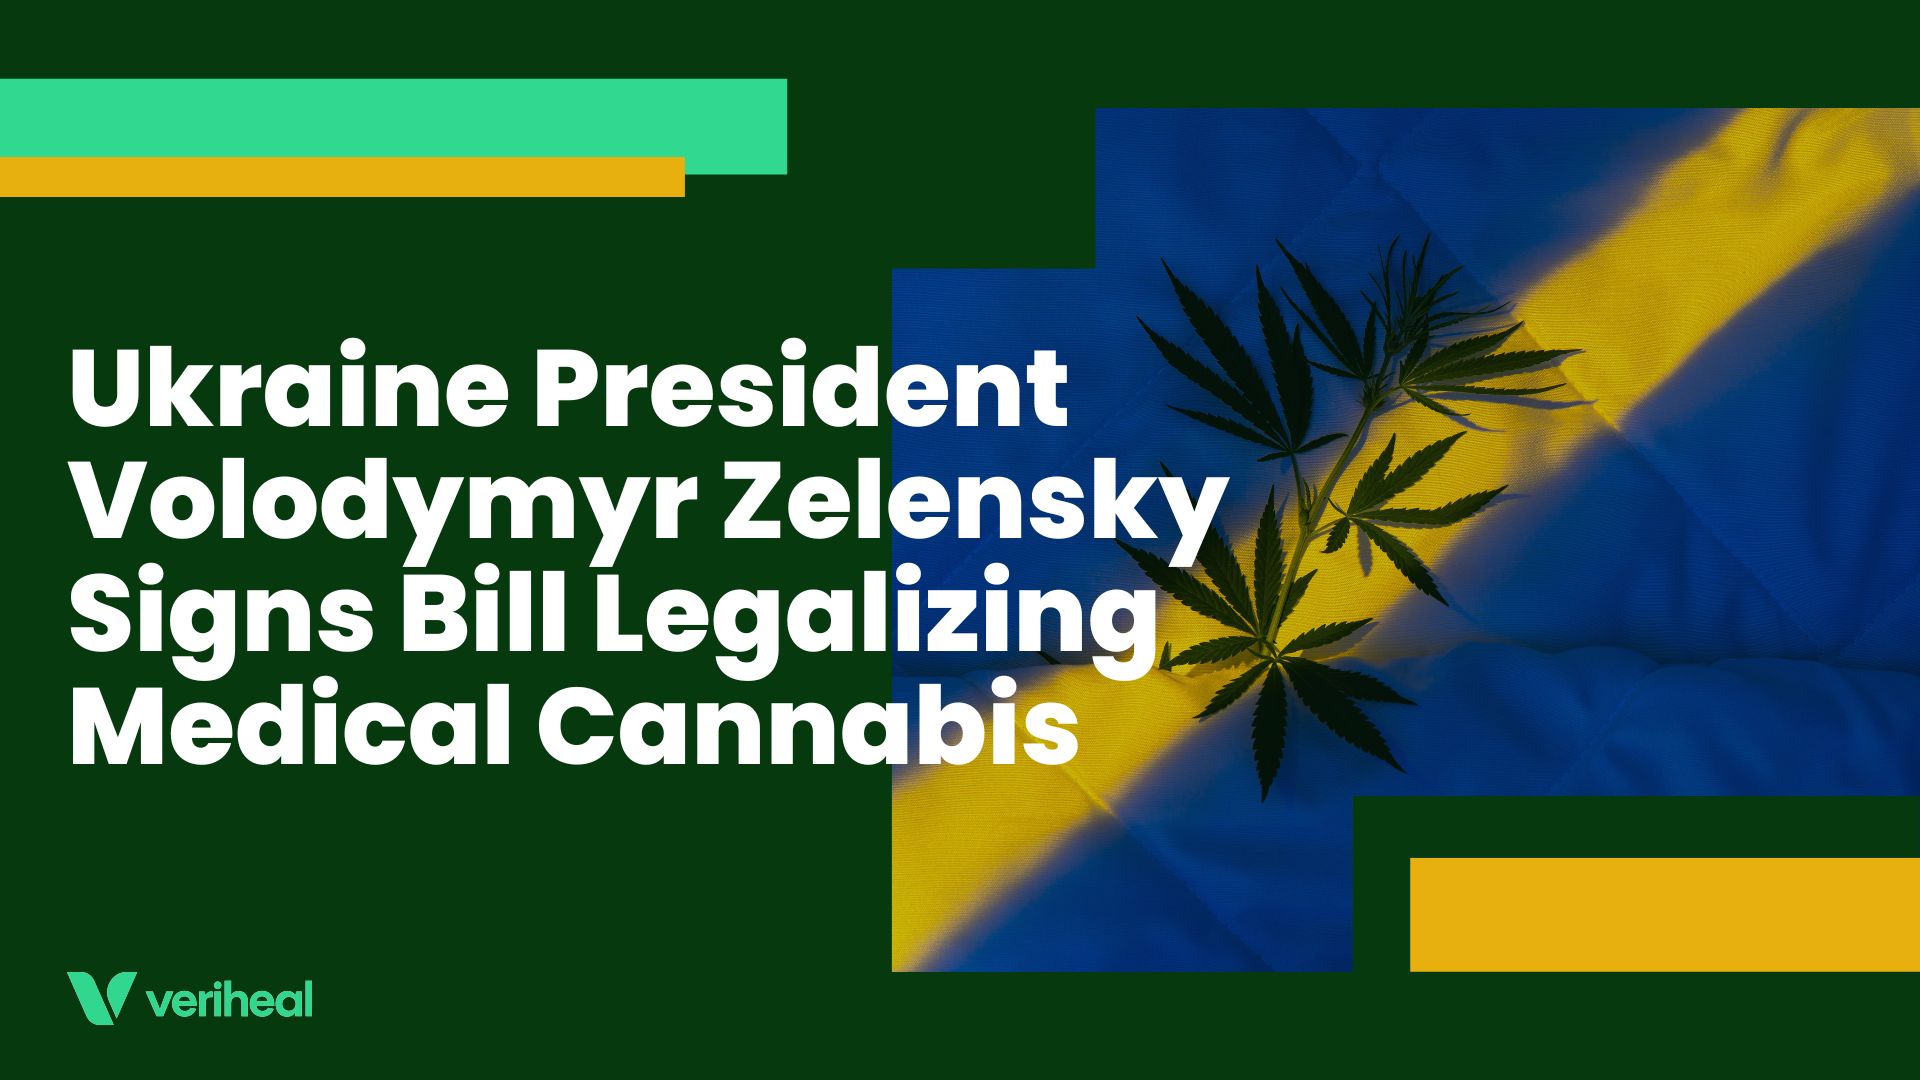 Ukraine President Volodymyr Zelensky Signs Bill Legalizing Medical Cannabis